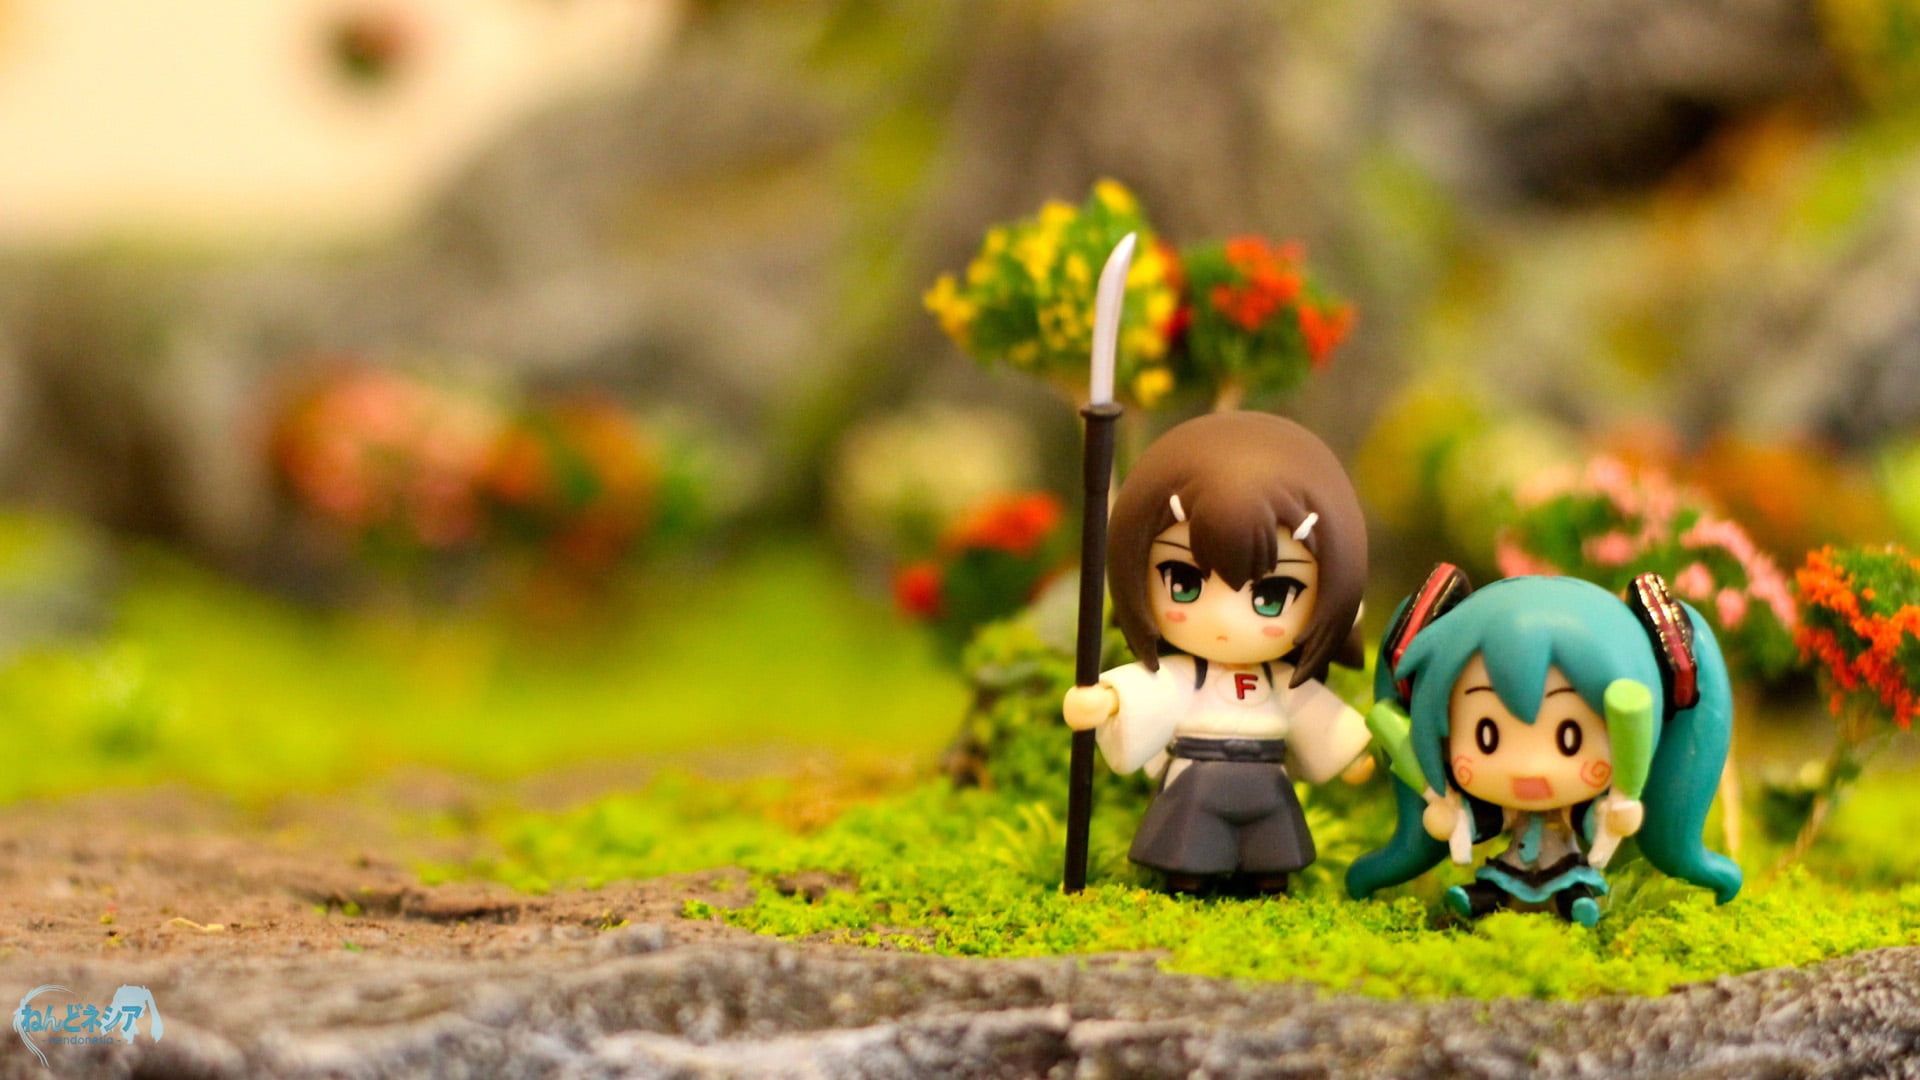 boy and girl anime character chibi figurine, Princess, Guardian